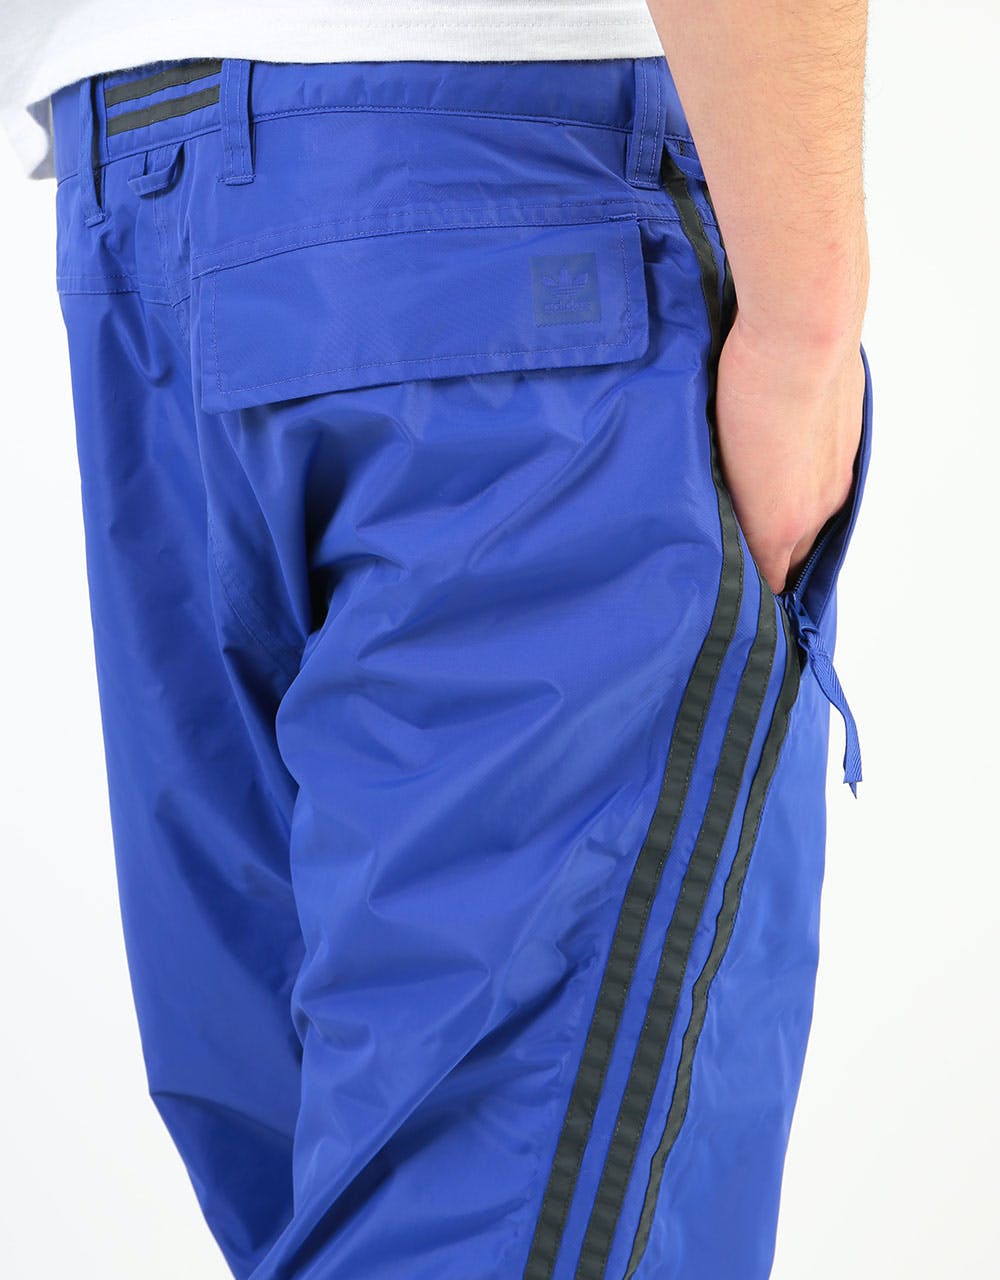 Adidas Riding Pant 2020 Snowboard Pants - Active Blue/Collegiate Gold